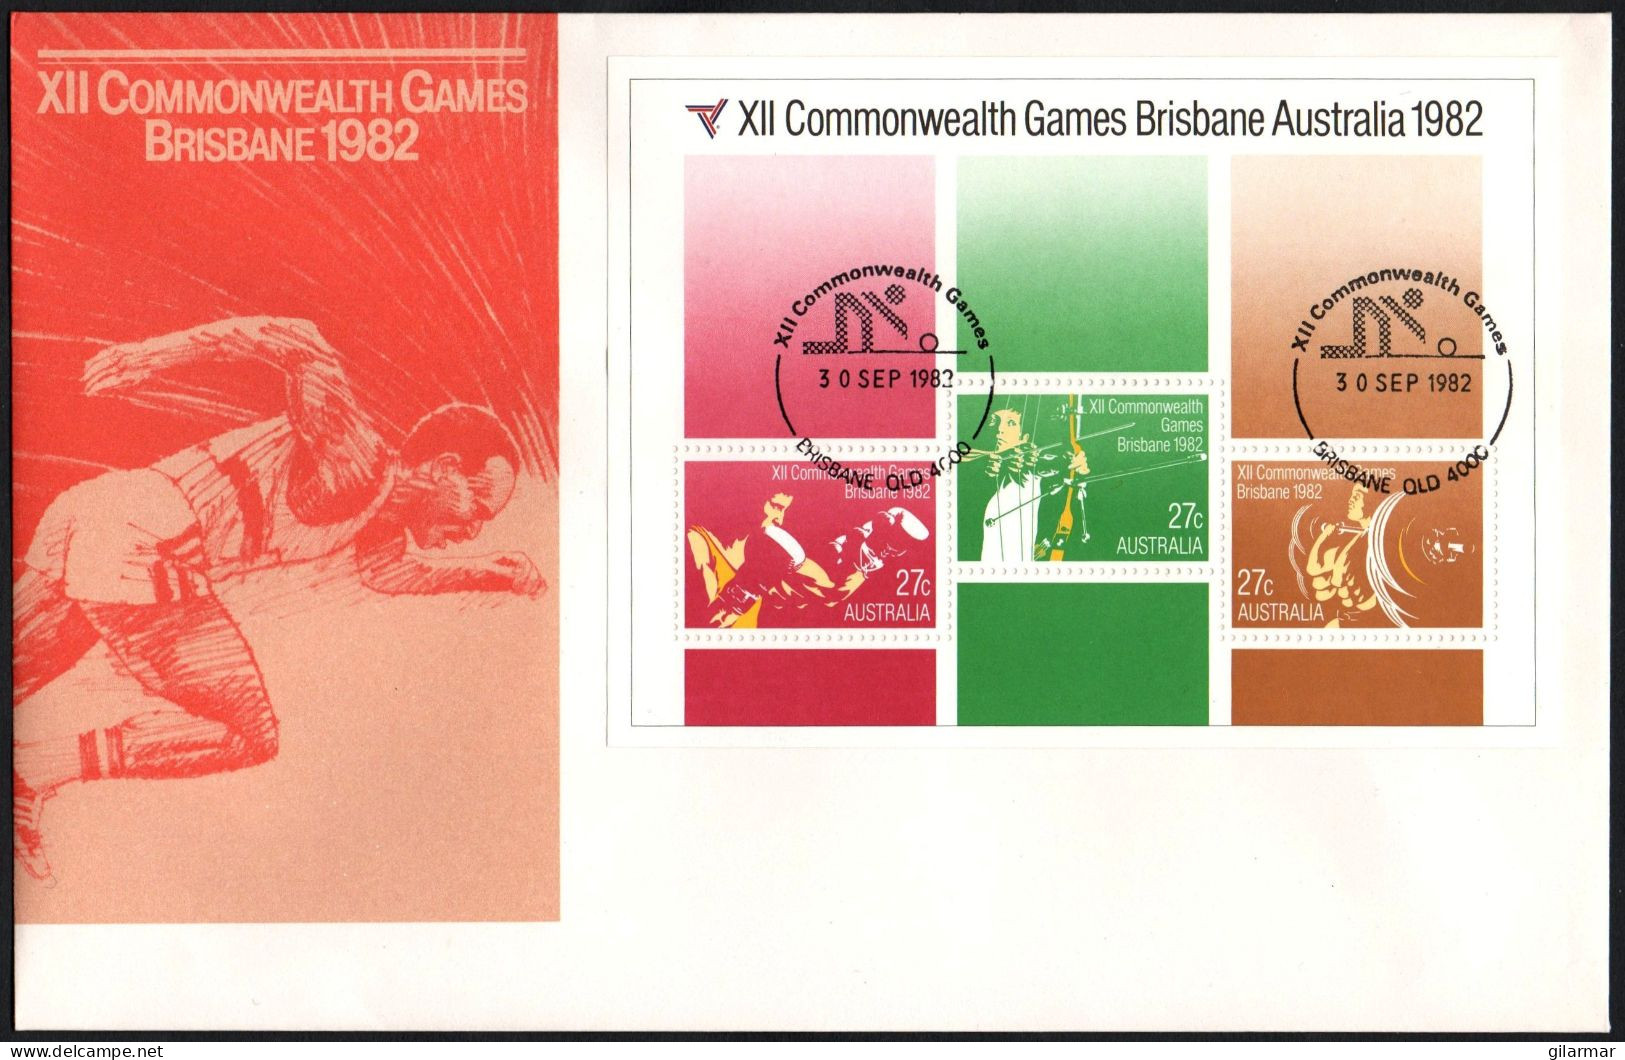 AUSTRALIA BRISBANE 1982 - XII COMMONWEALTH GAMES - SHEET - BOWLS POSTMARK - G - Bowls